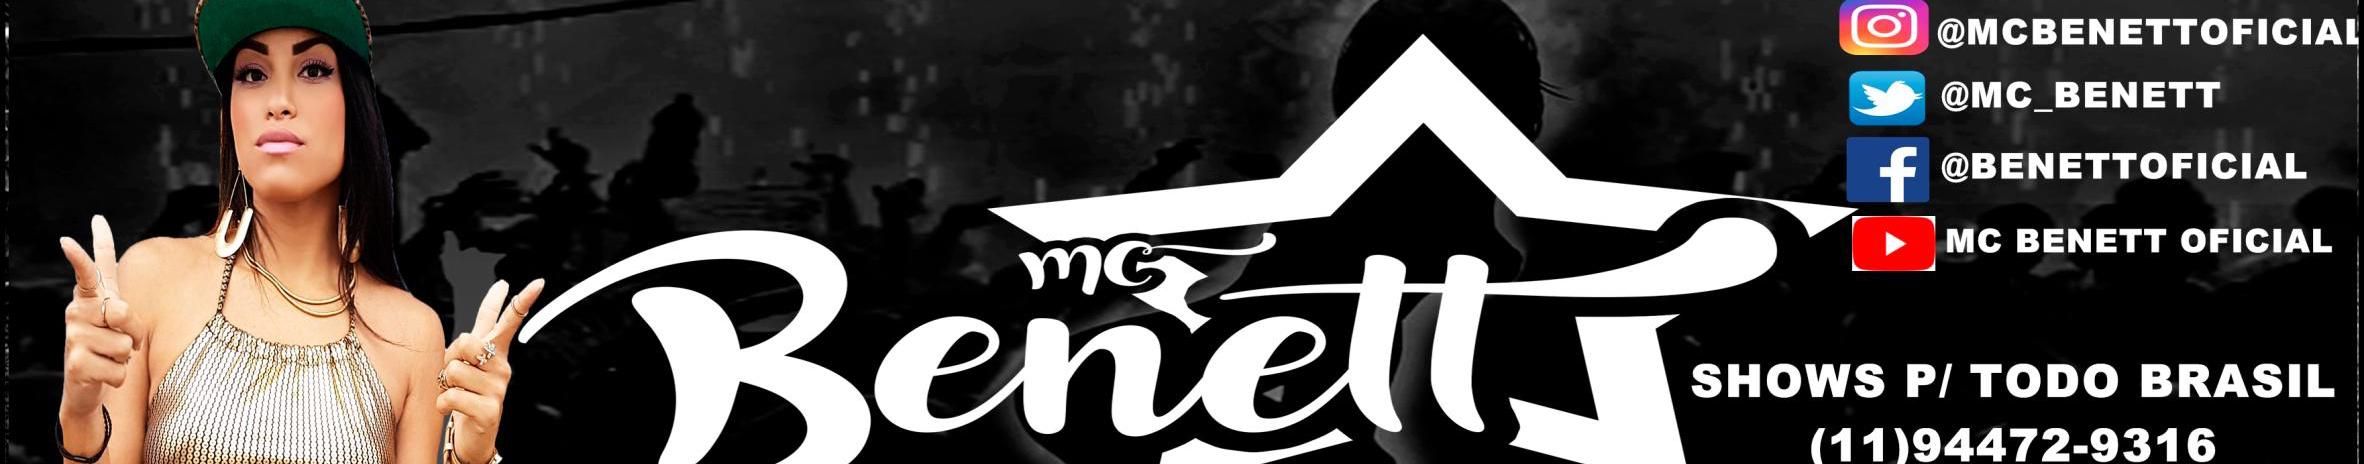 Imagem de capa de MC BENETT